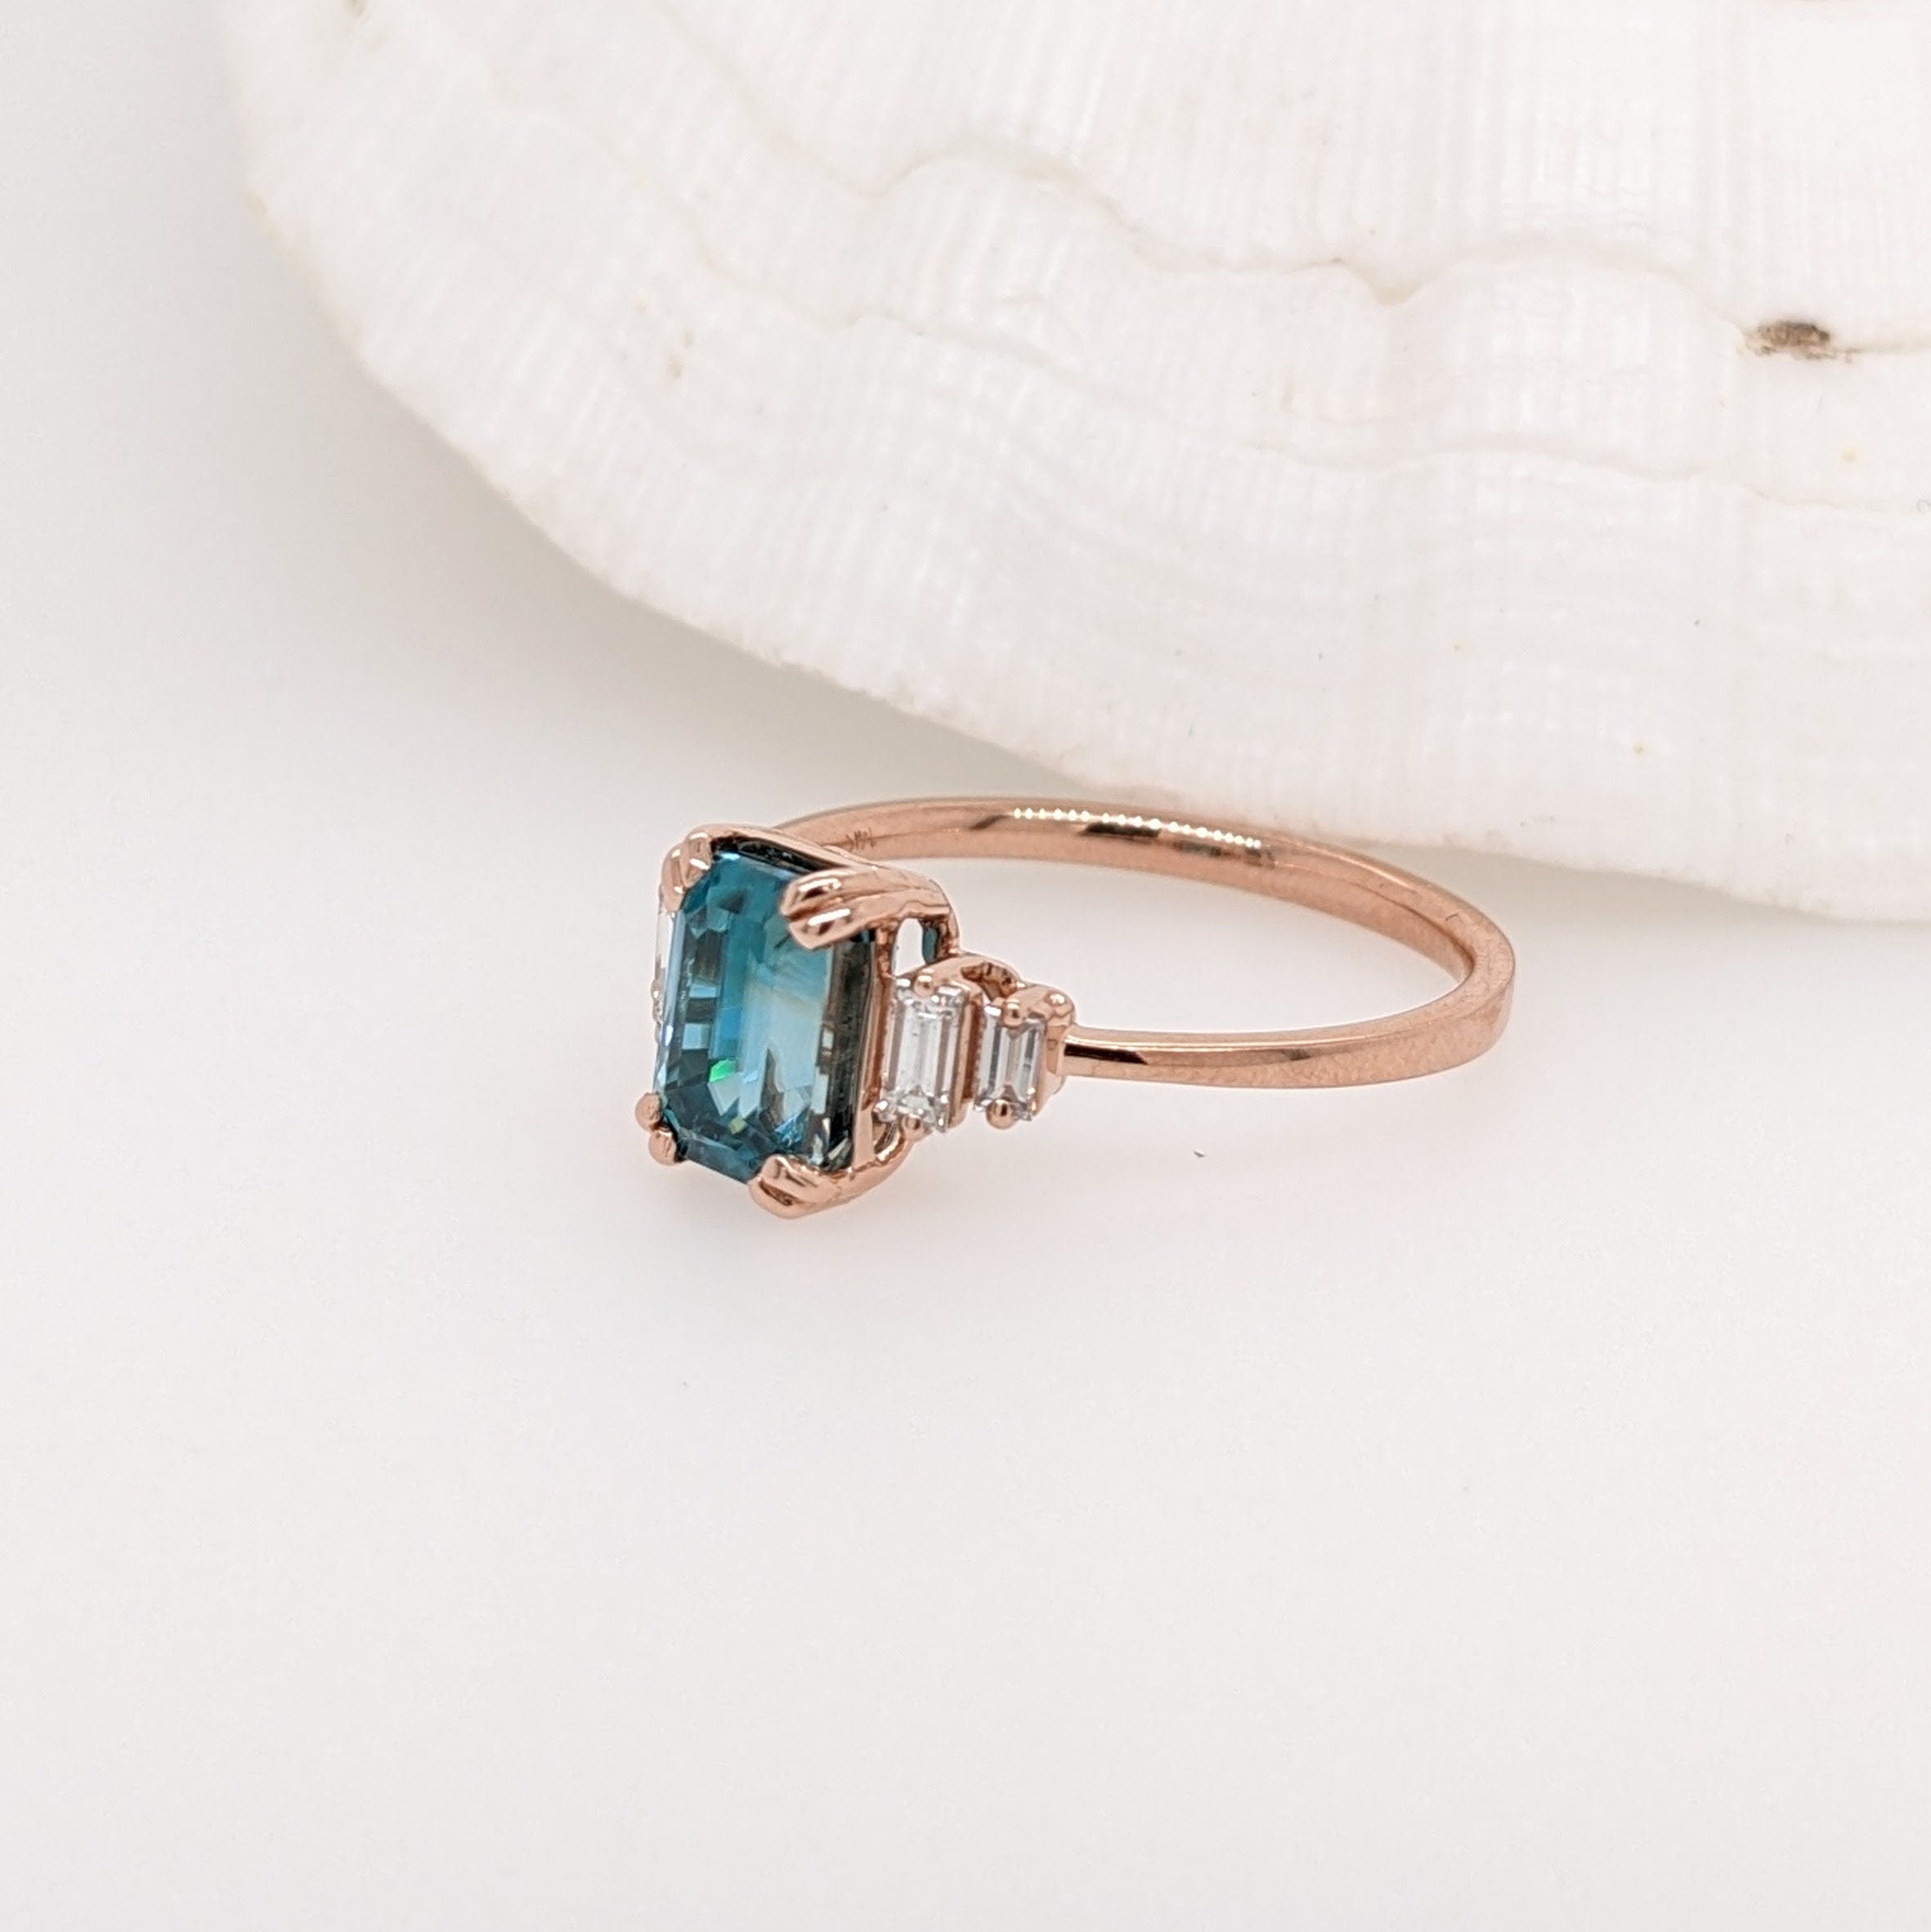 Vibrant Blue Zircon Ring in 14K Rose Gold w Natural Diamond Accents | Emerald Cut 8.5x6mm | December Birthstone | Elegant Statement Ring